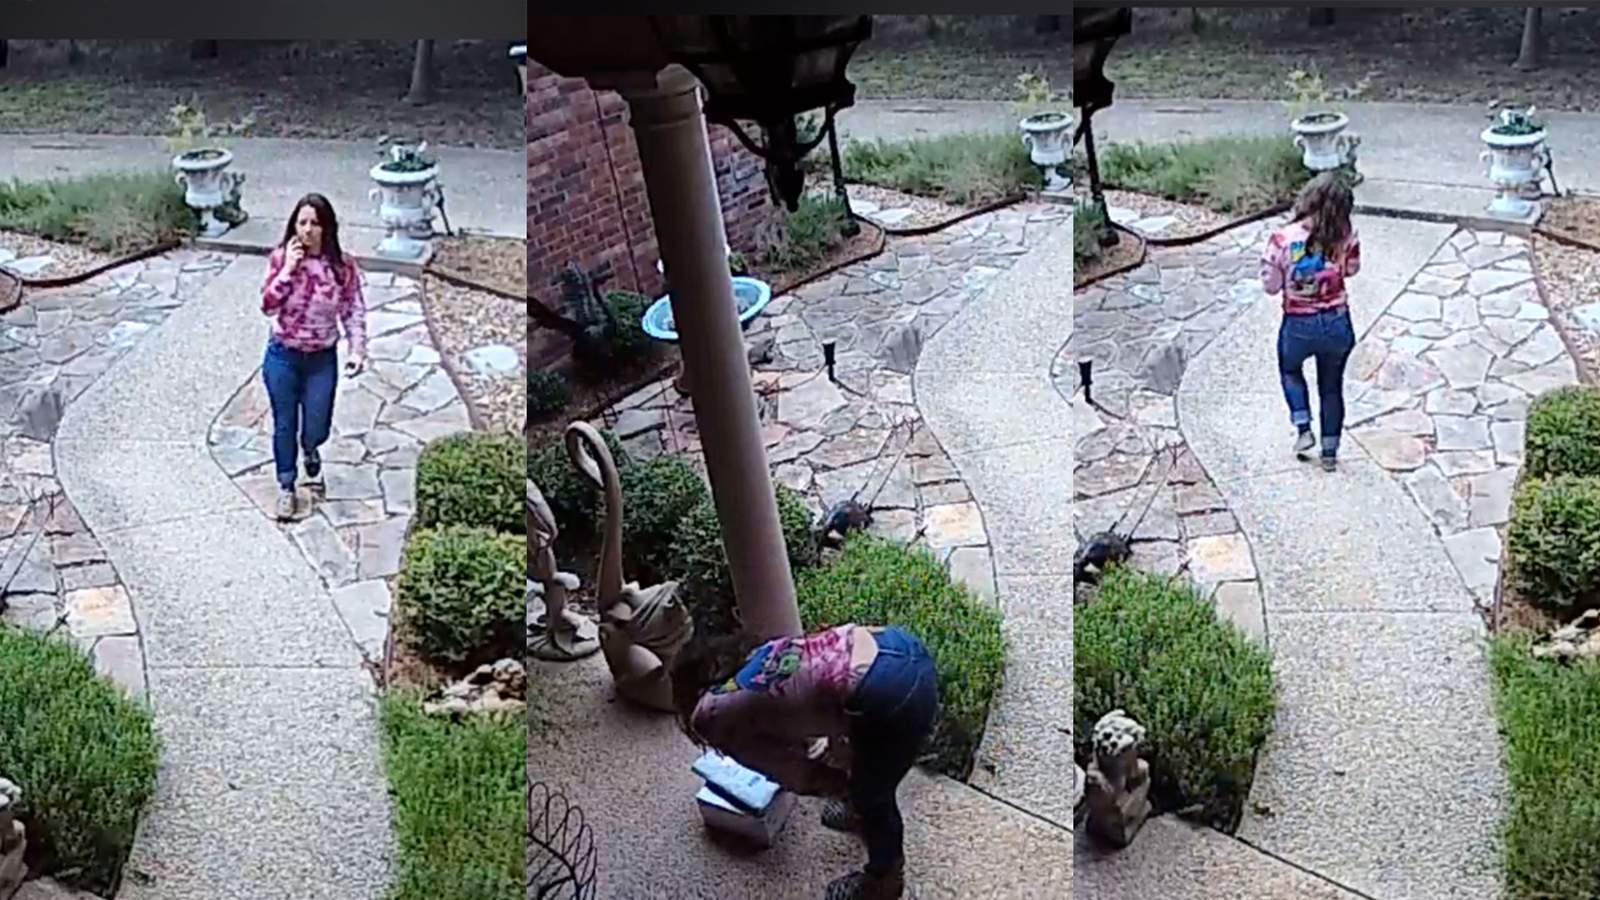 Garden Ridge porch pirate caught on video